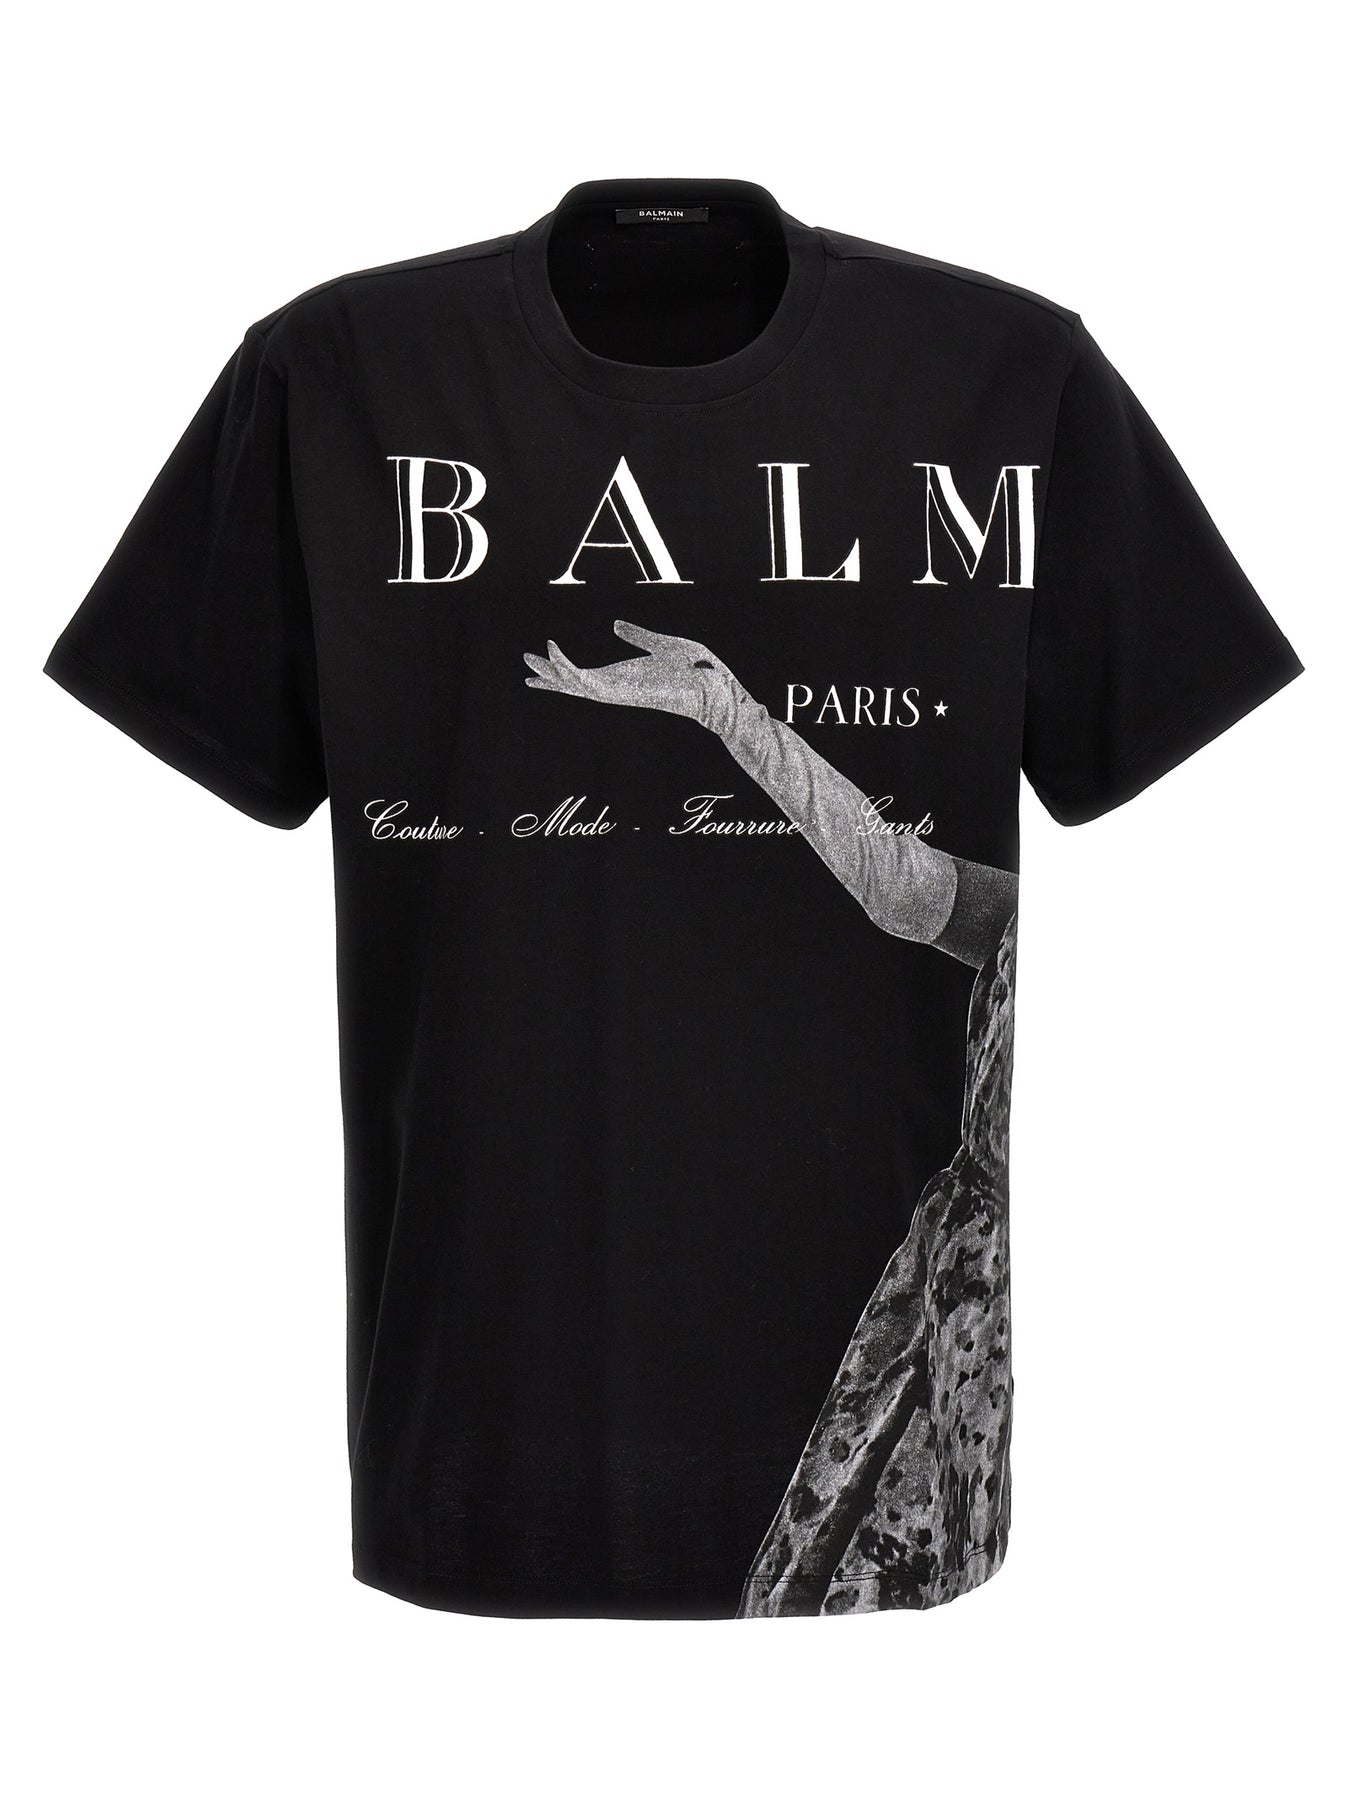 BALMAIN PRINTED T-SHIRT WHITE/BLACK